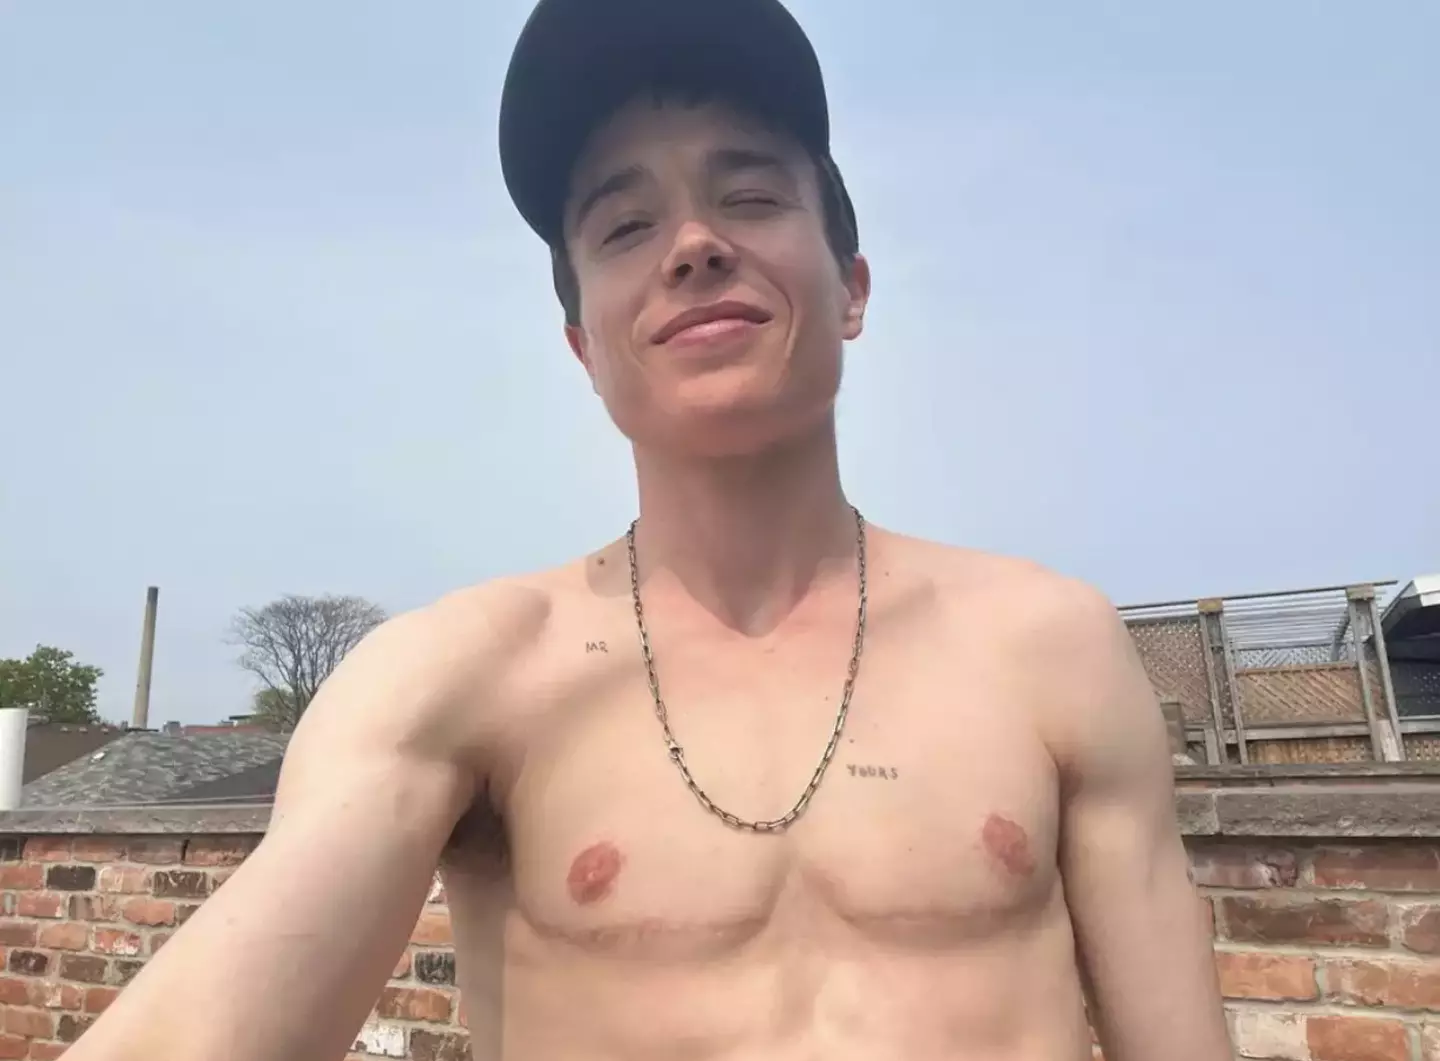 Elliot Page shared his first shirtless selfie on Instagram last week.